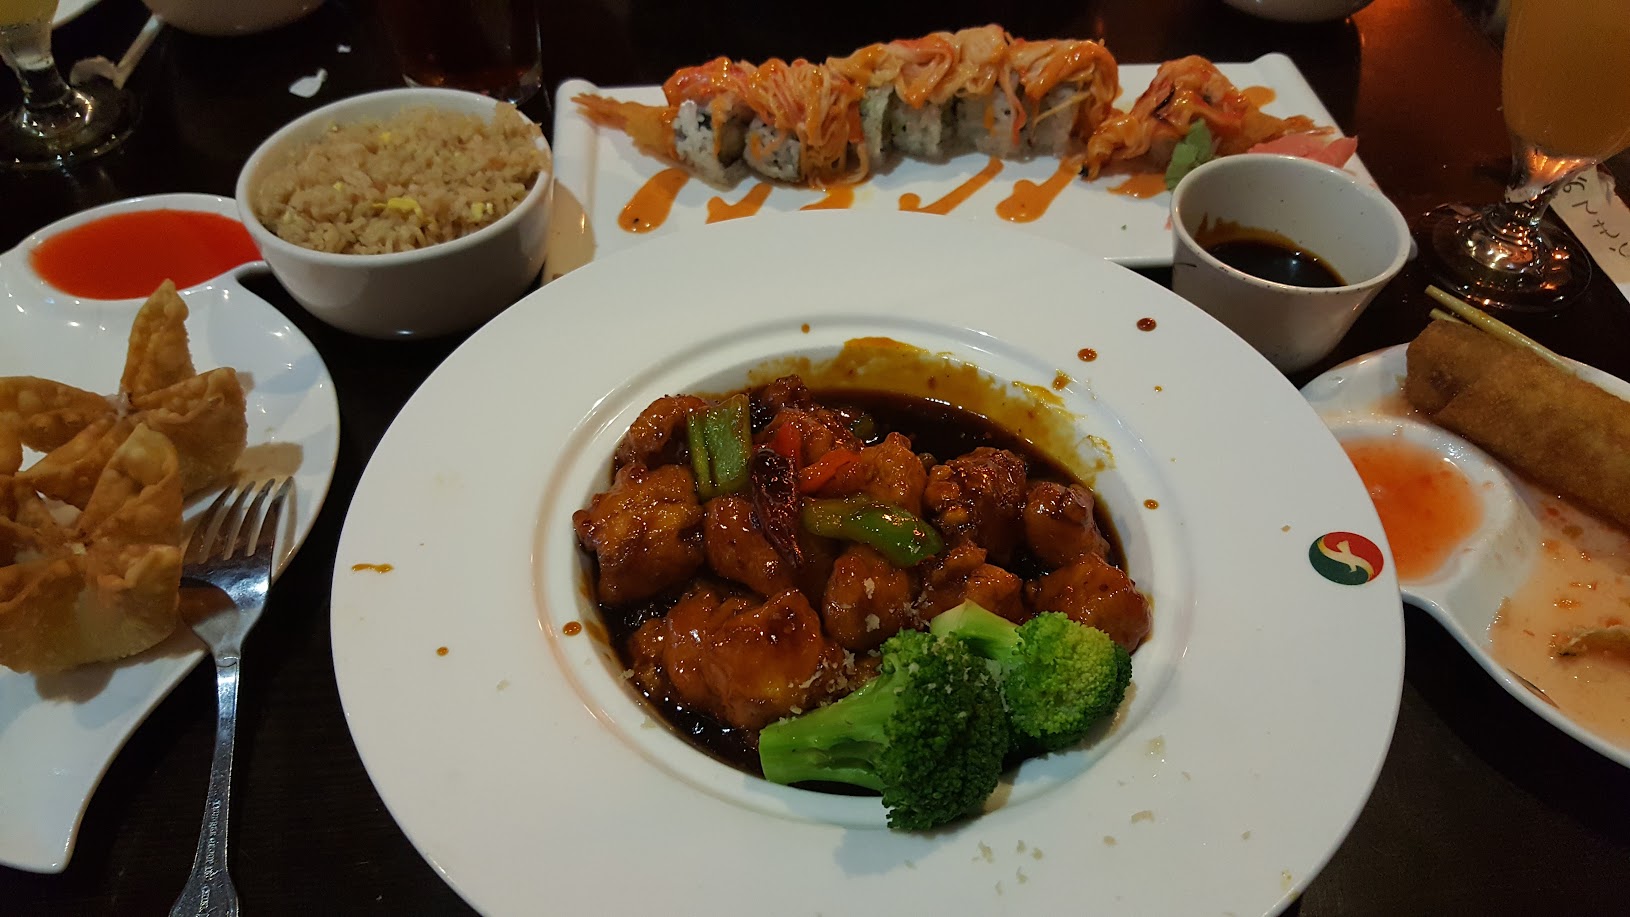 Fulin's Asian Cuisine